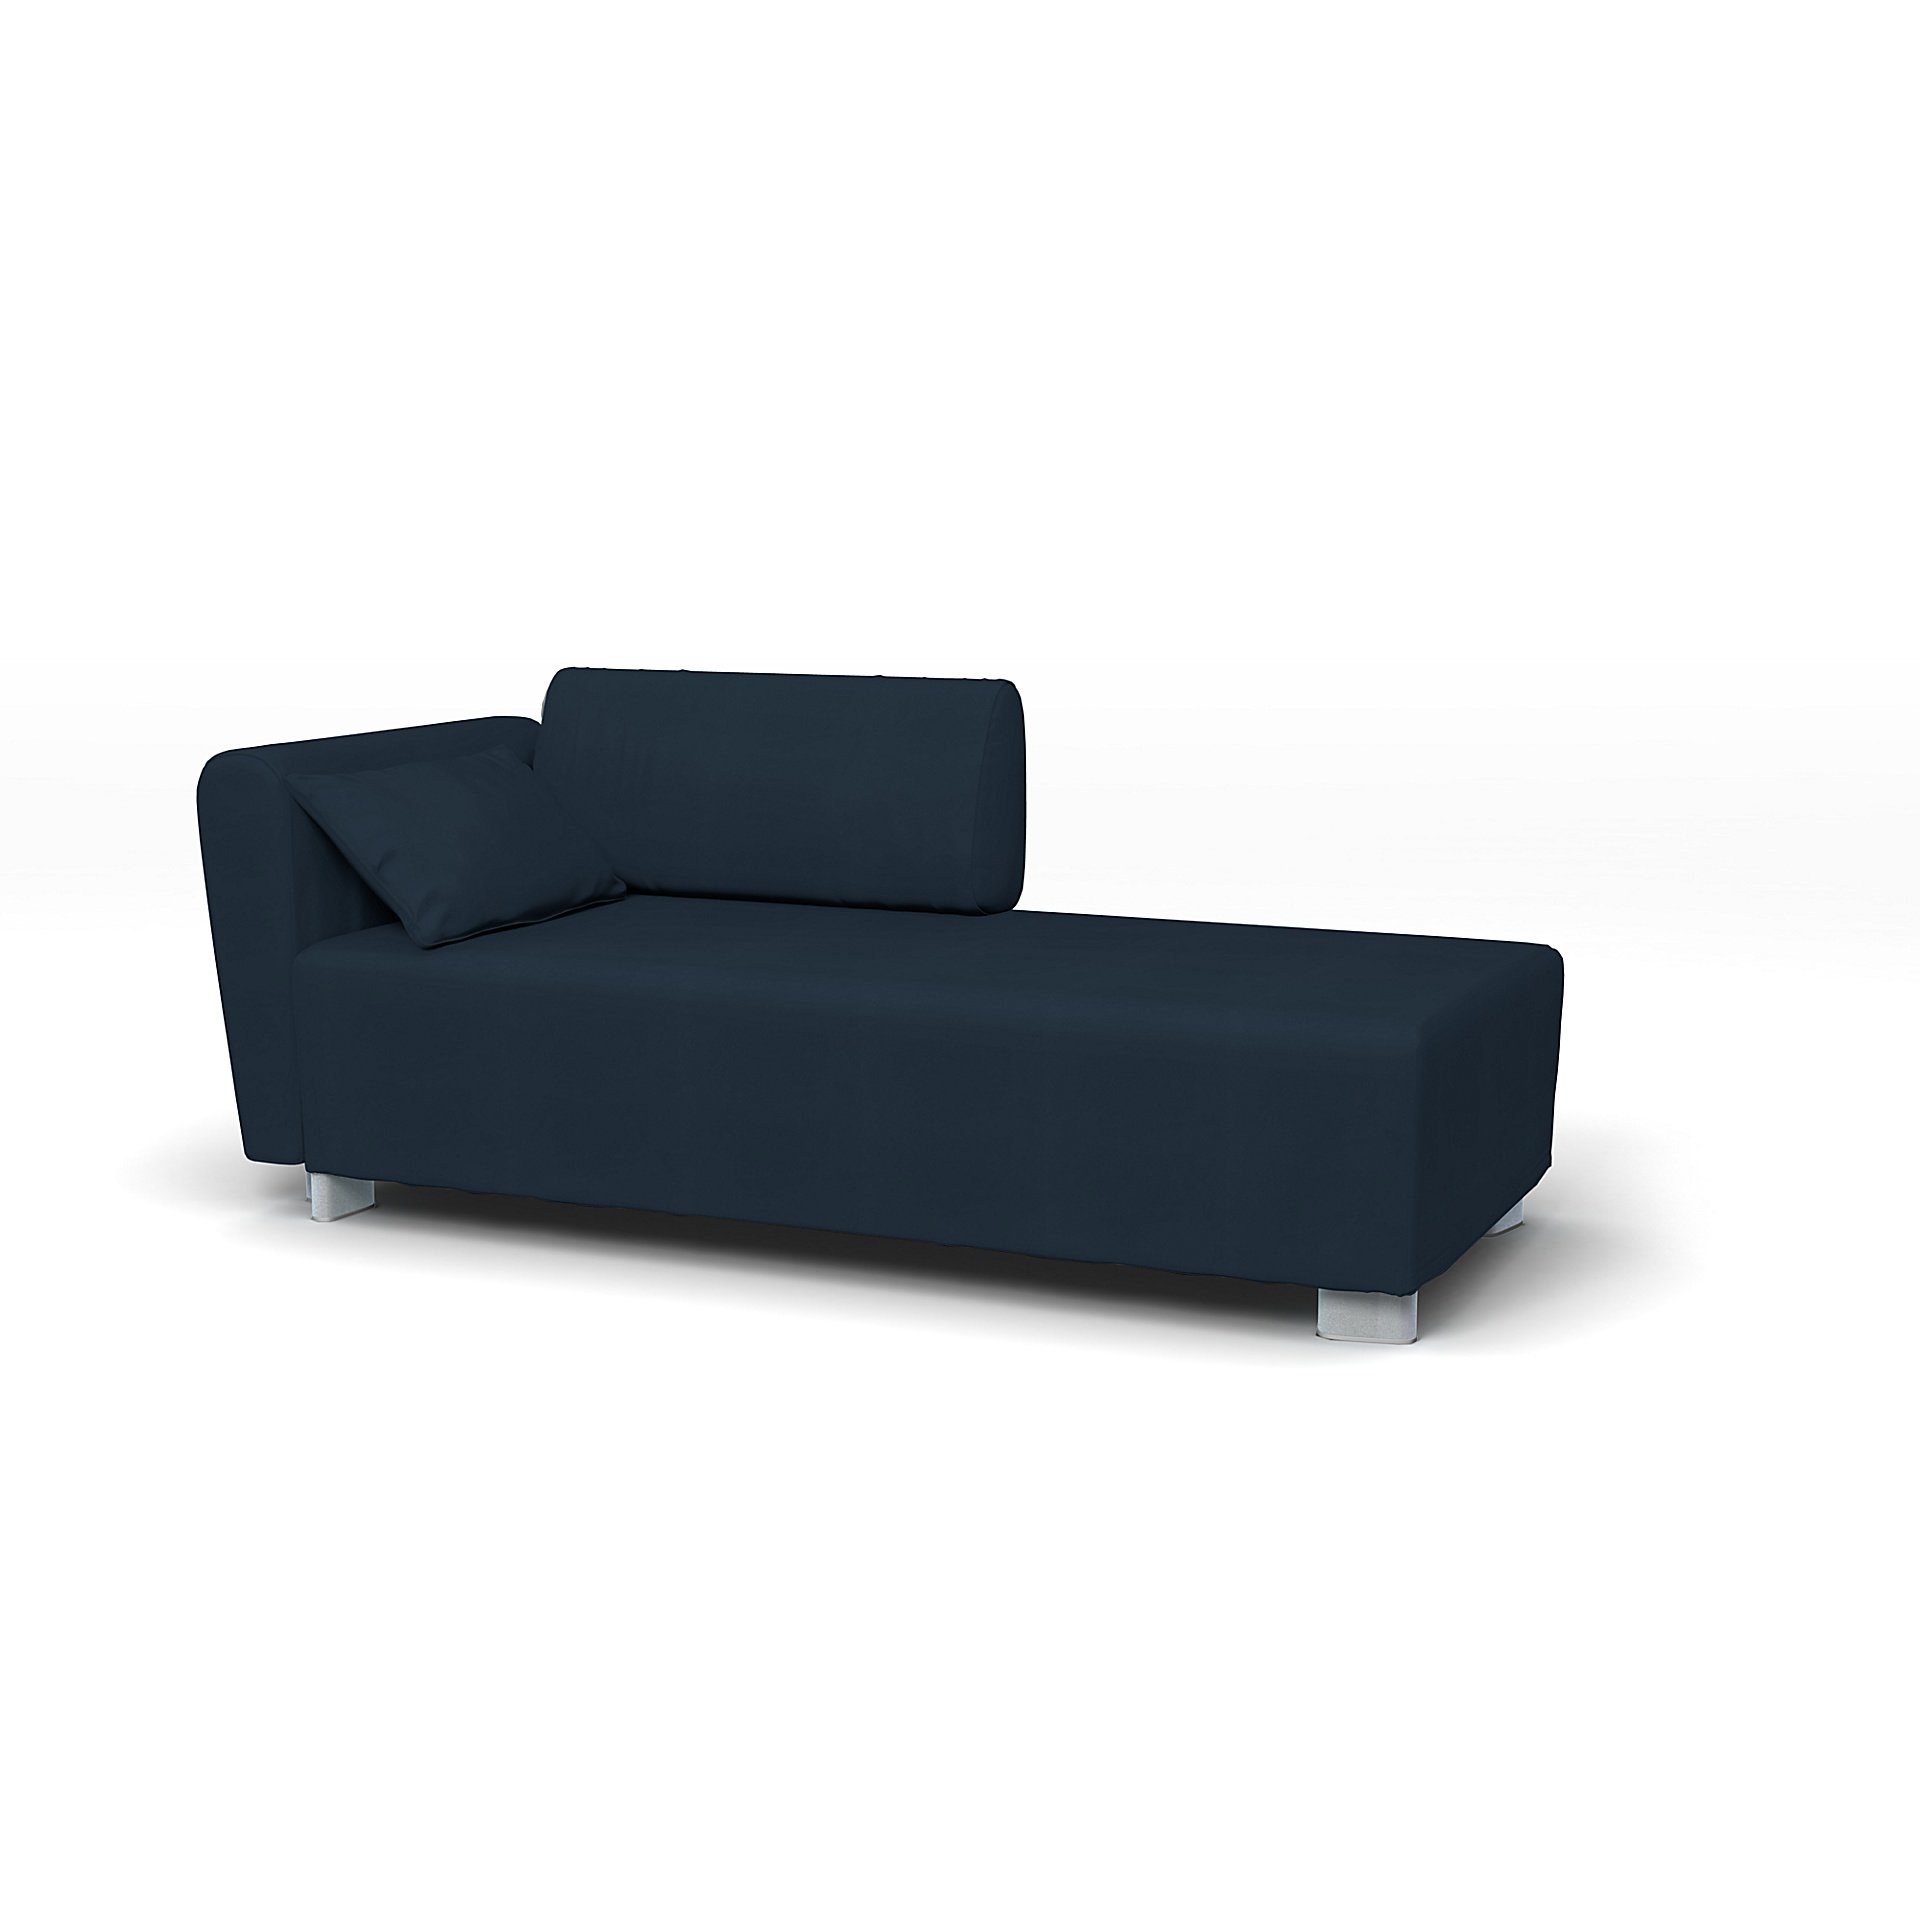 IKEA - Mysinge Chaise Longue with Armrest Cover, Navy Blue, Cotton - Bemz